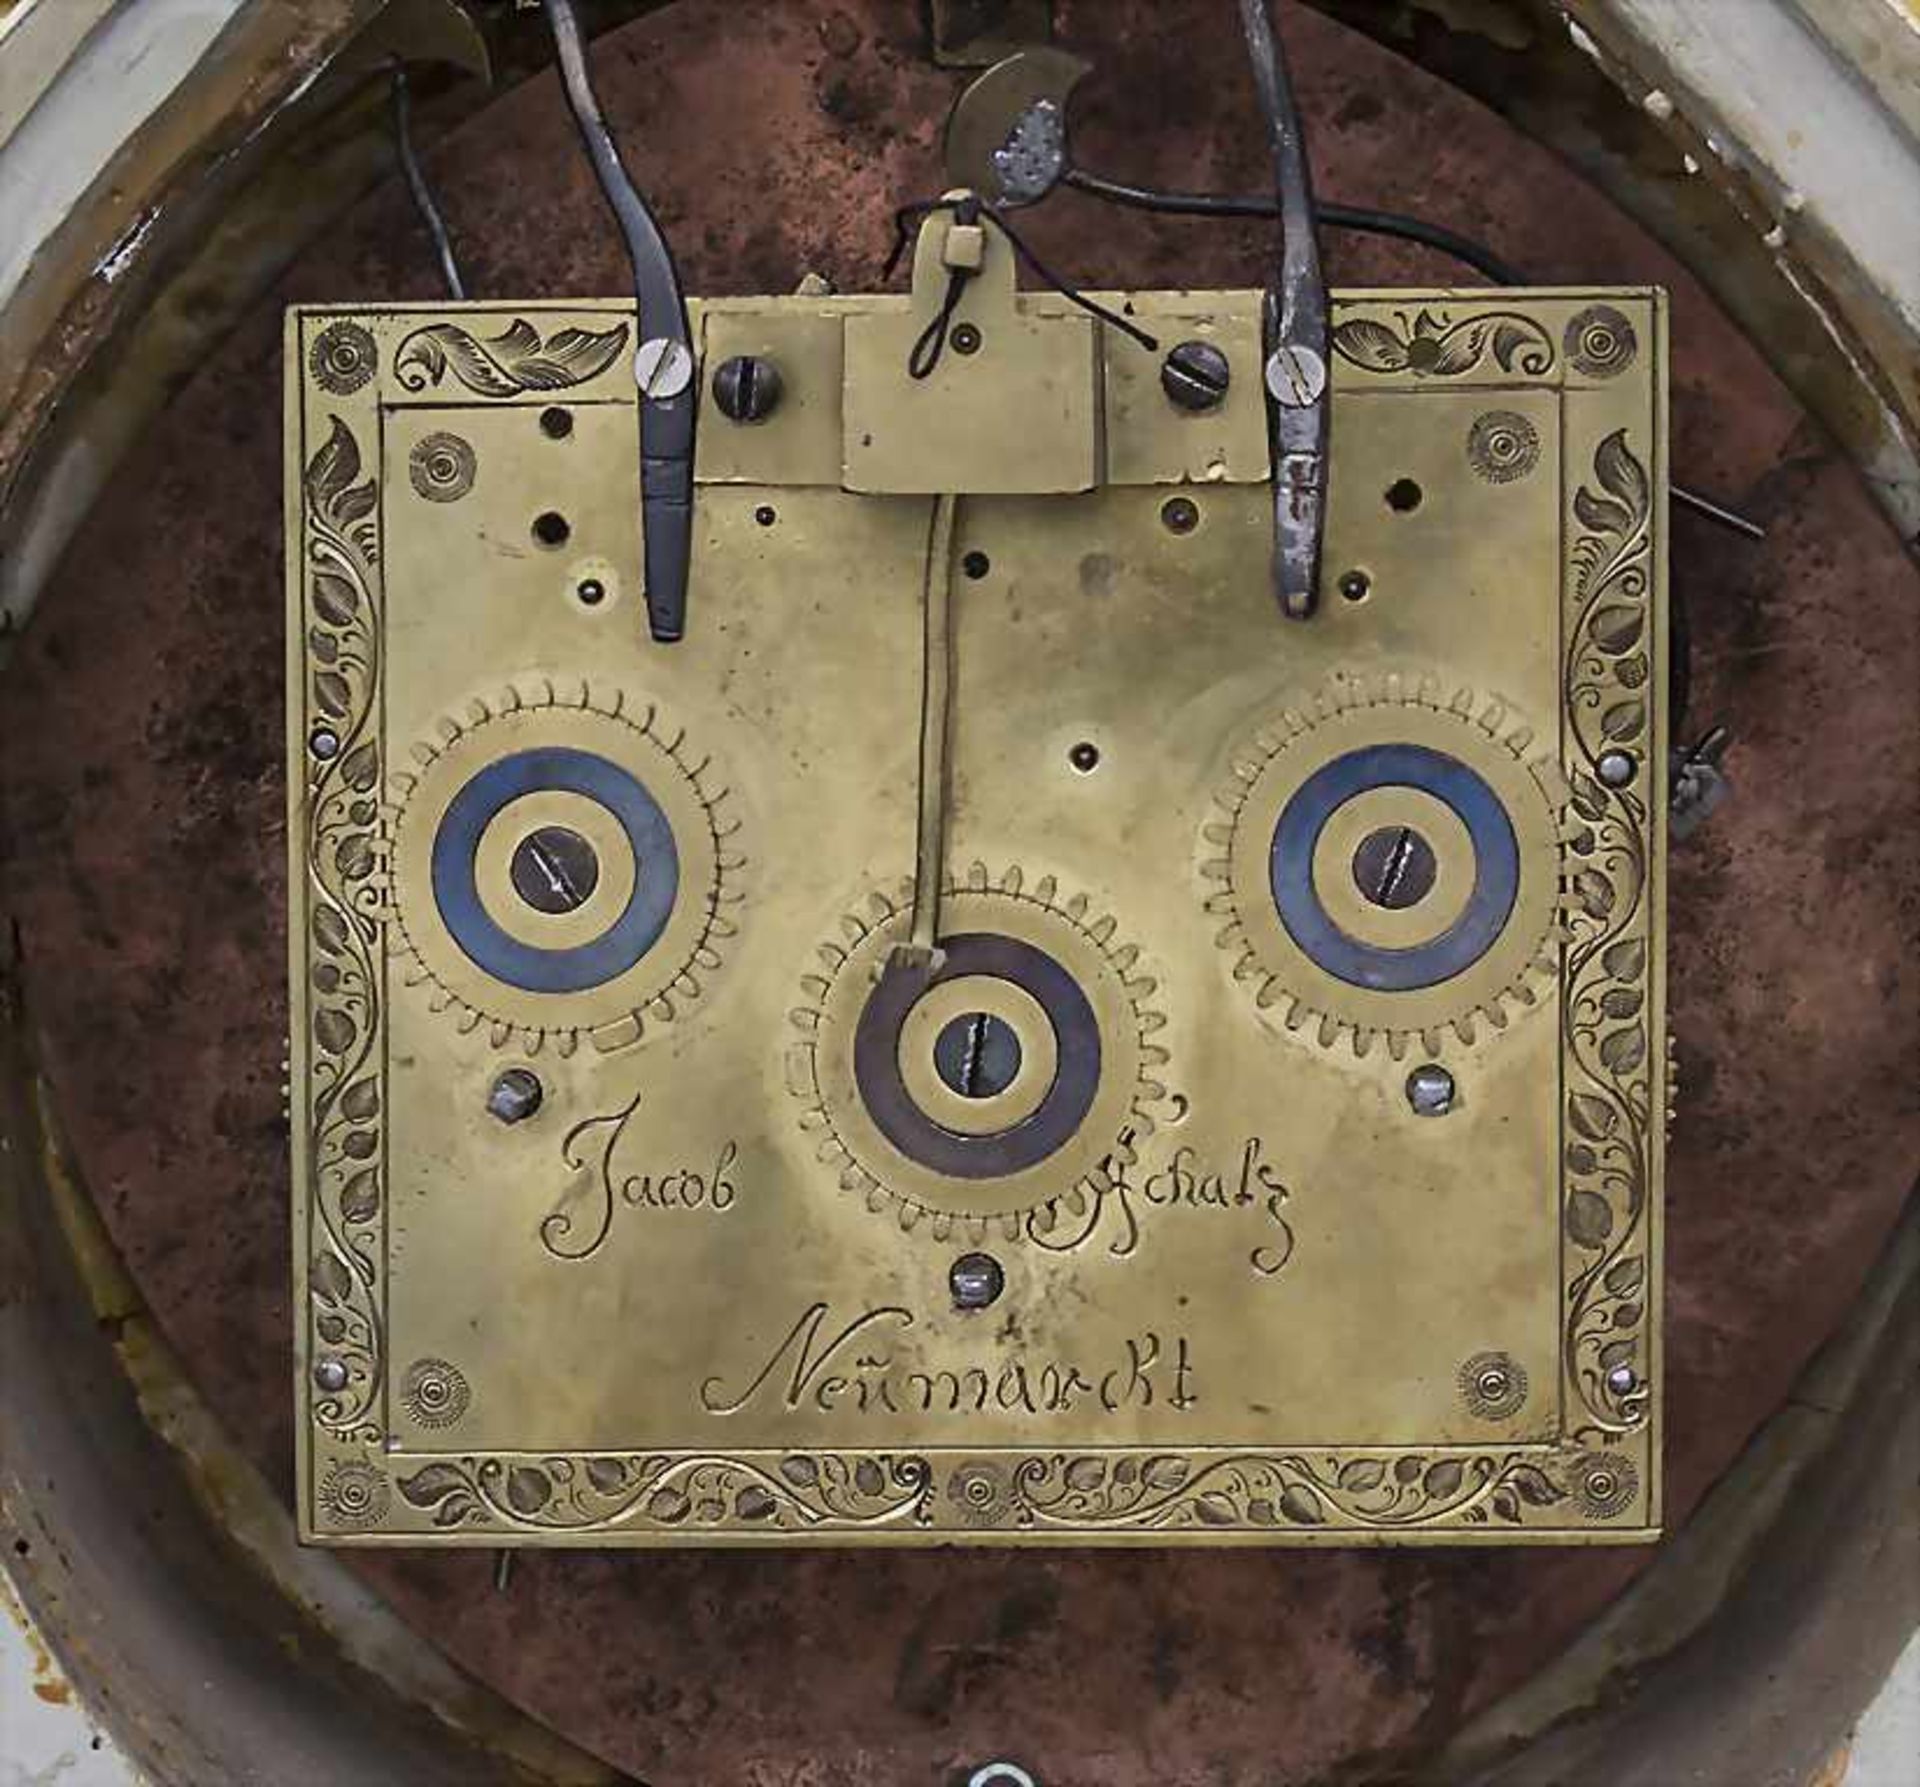 Louis-Seize-Kaminuhr / Louis-Seize mantle Clock, Jocob Scholz, Neumarkt, um 1775Holzge - Image 4 of 4